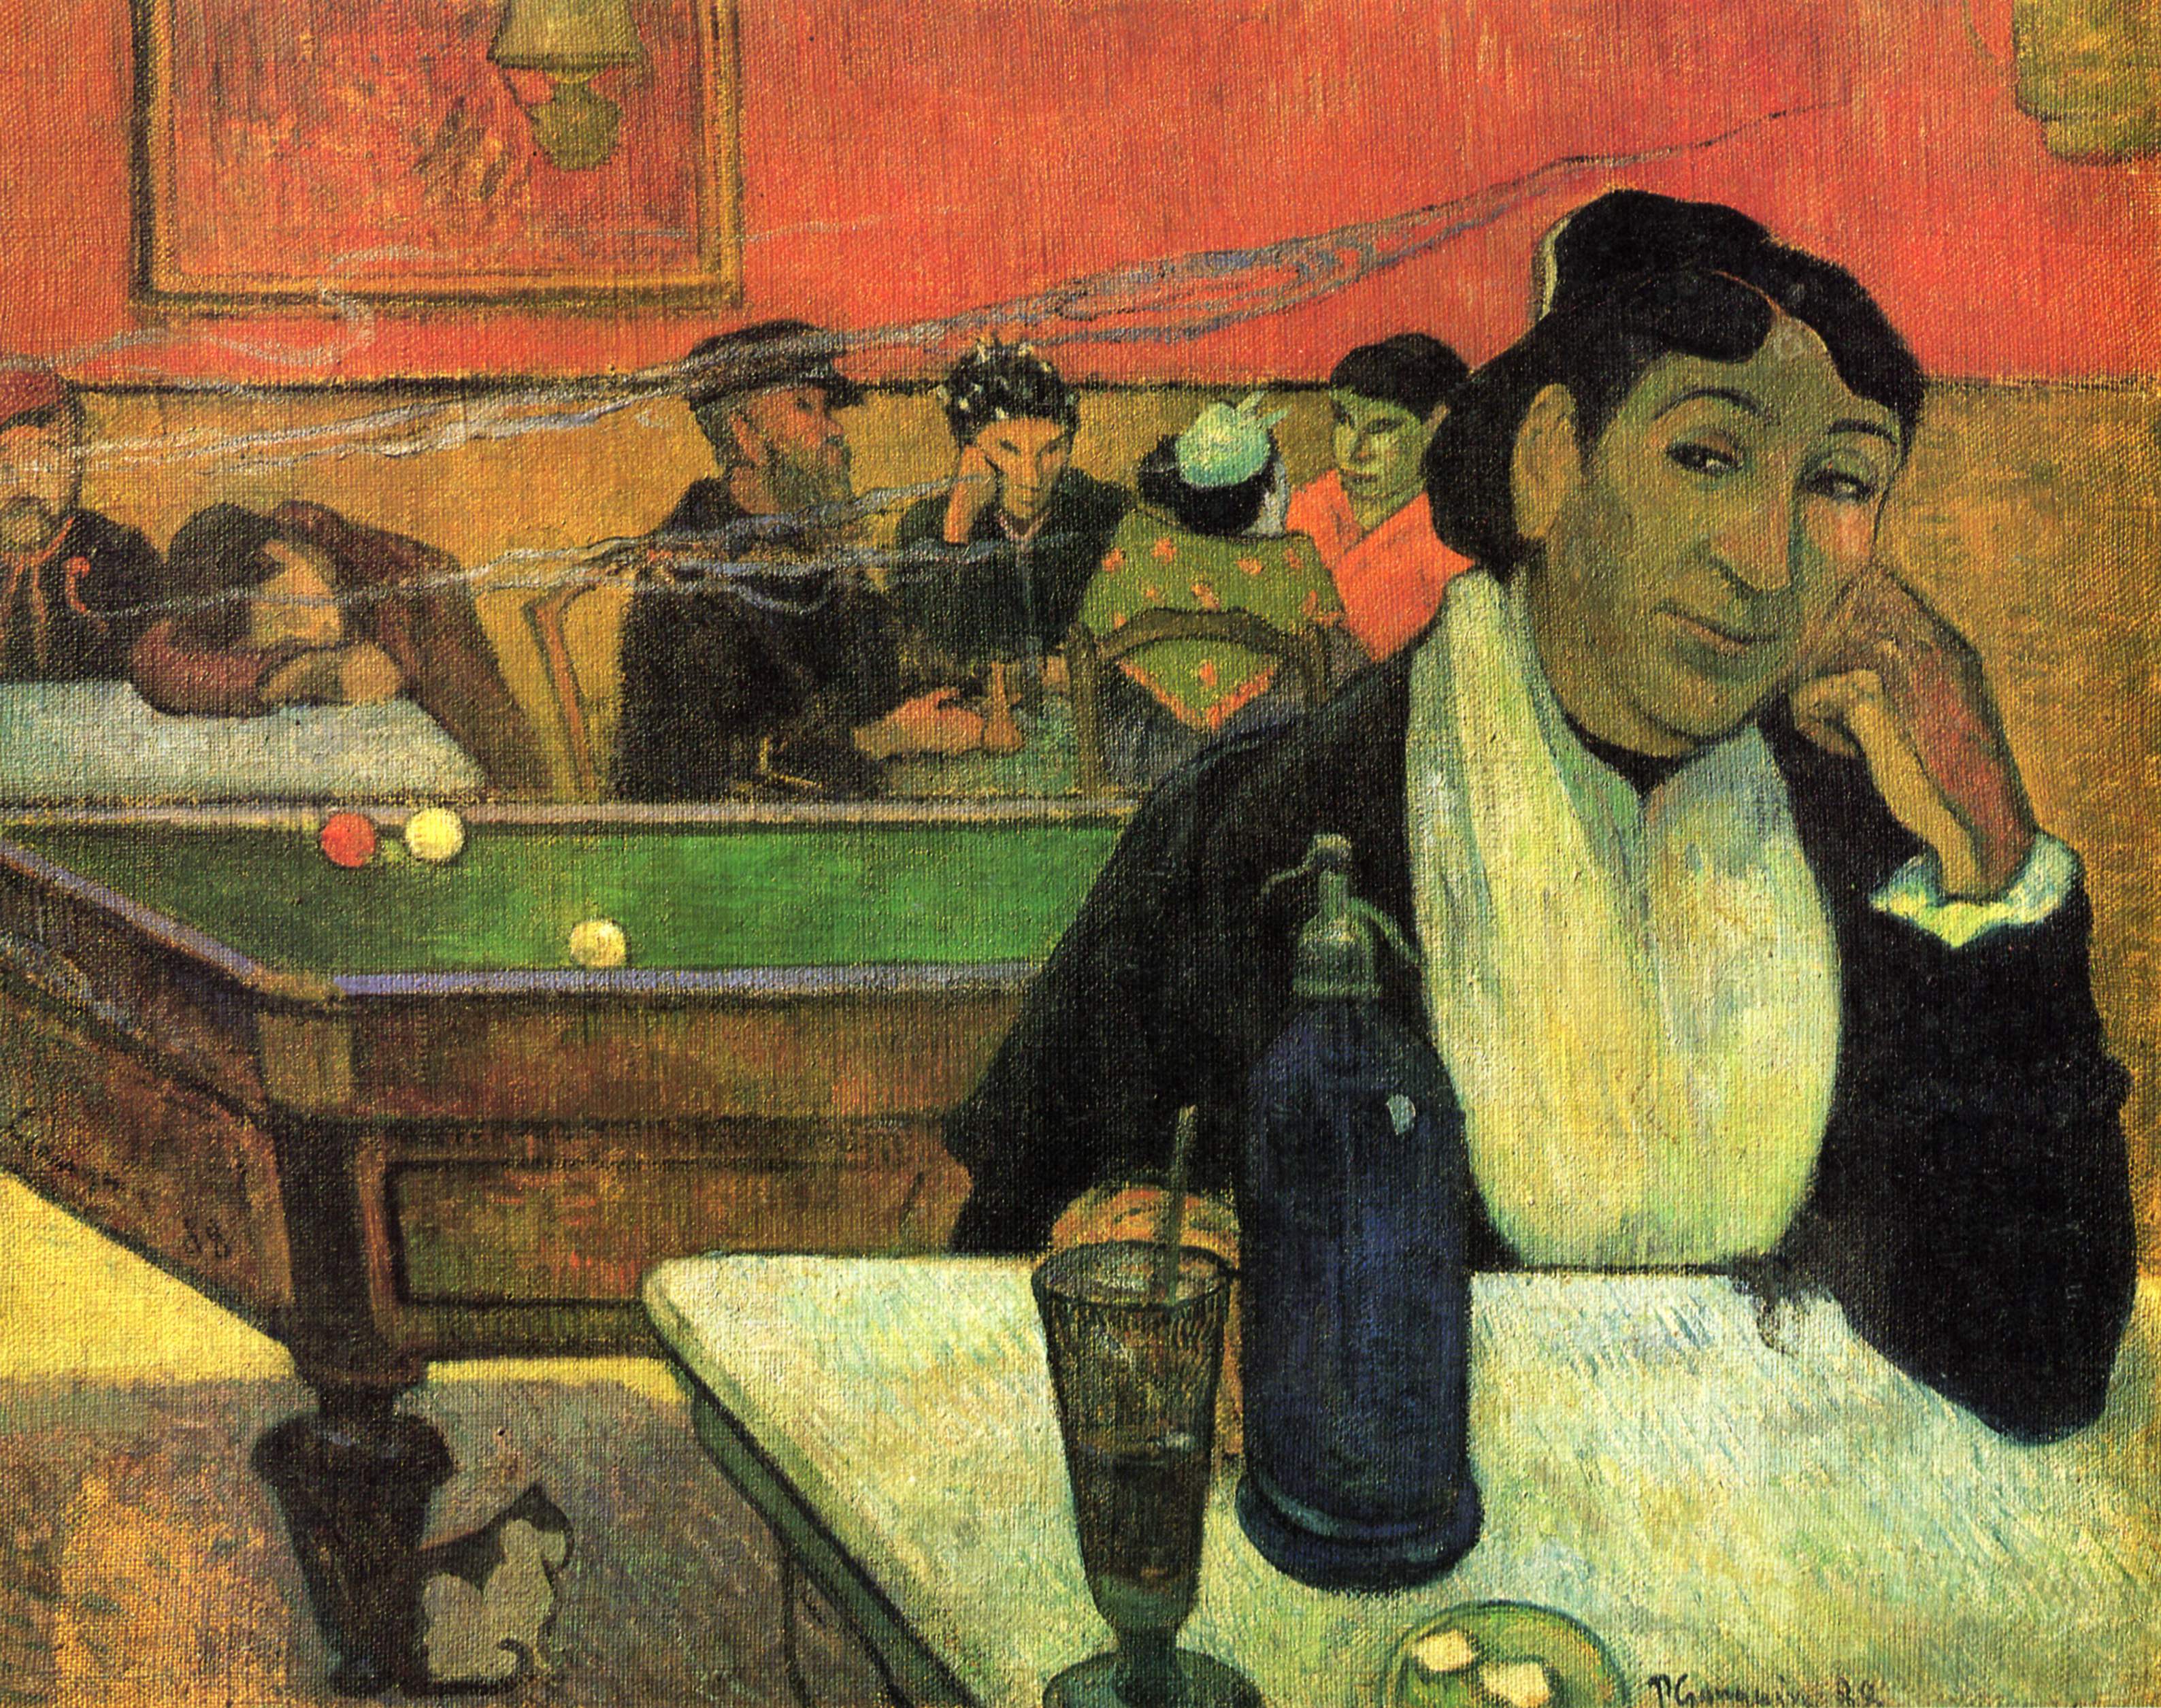 Night Café at Arles by Paul Gauguin - 1888 - 73 x 92 cm The Pushkin Museum of Fine Art